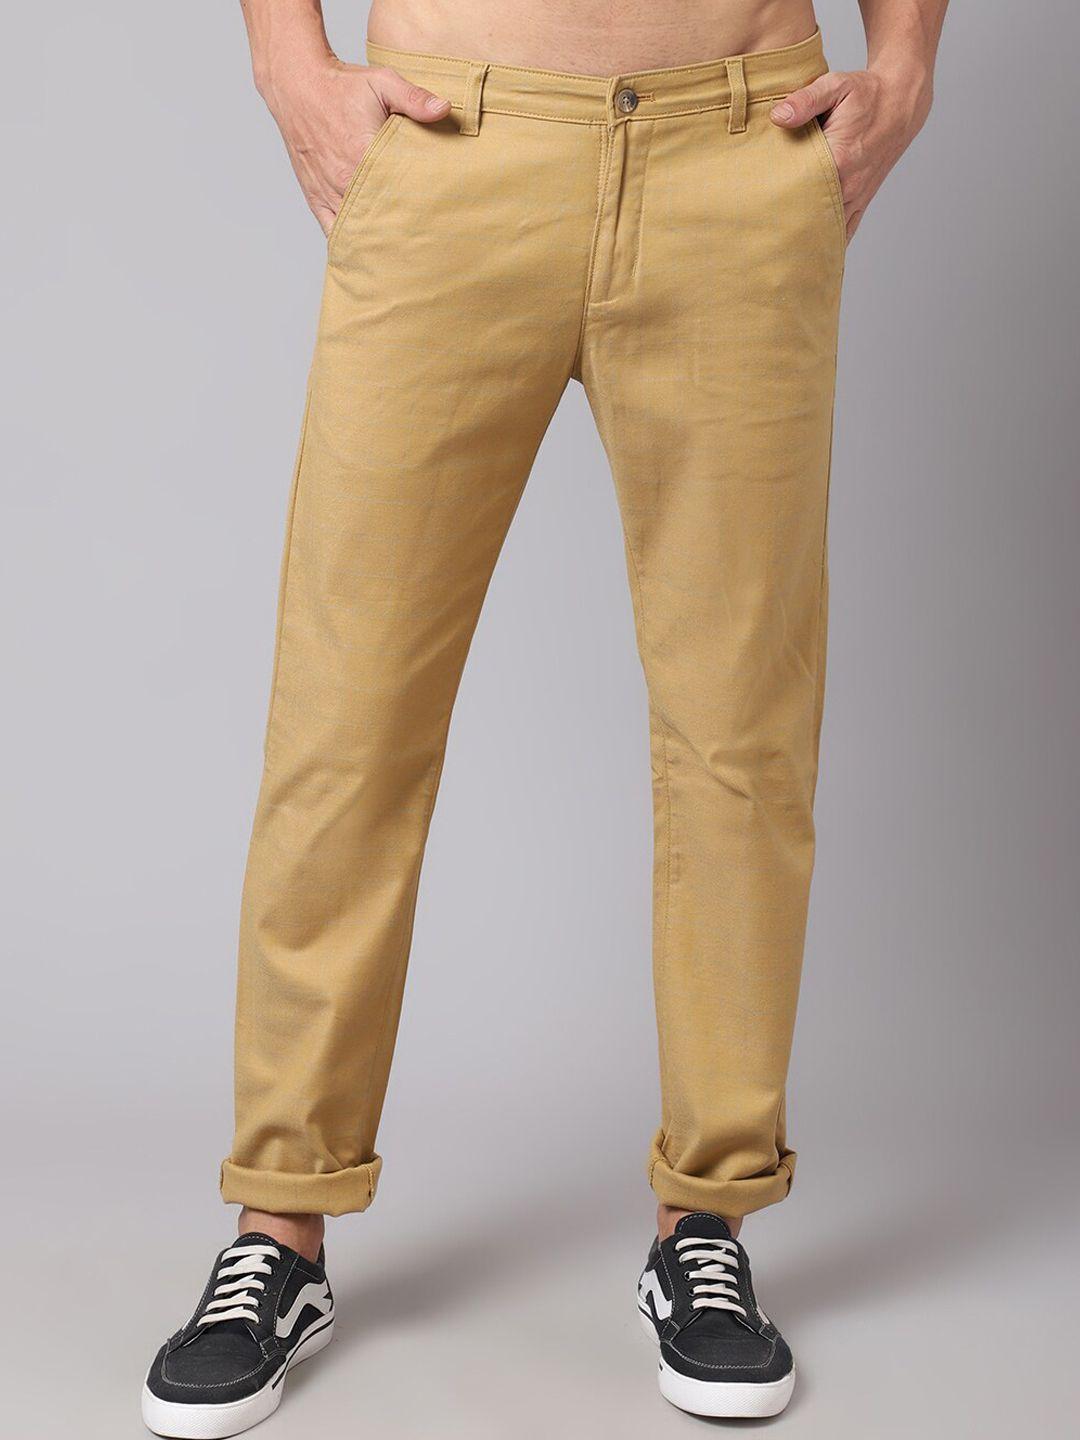 cantabil men khaki chinos cotton trousers